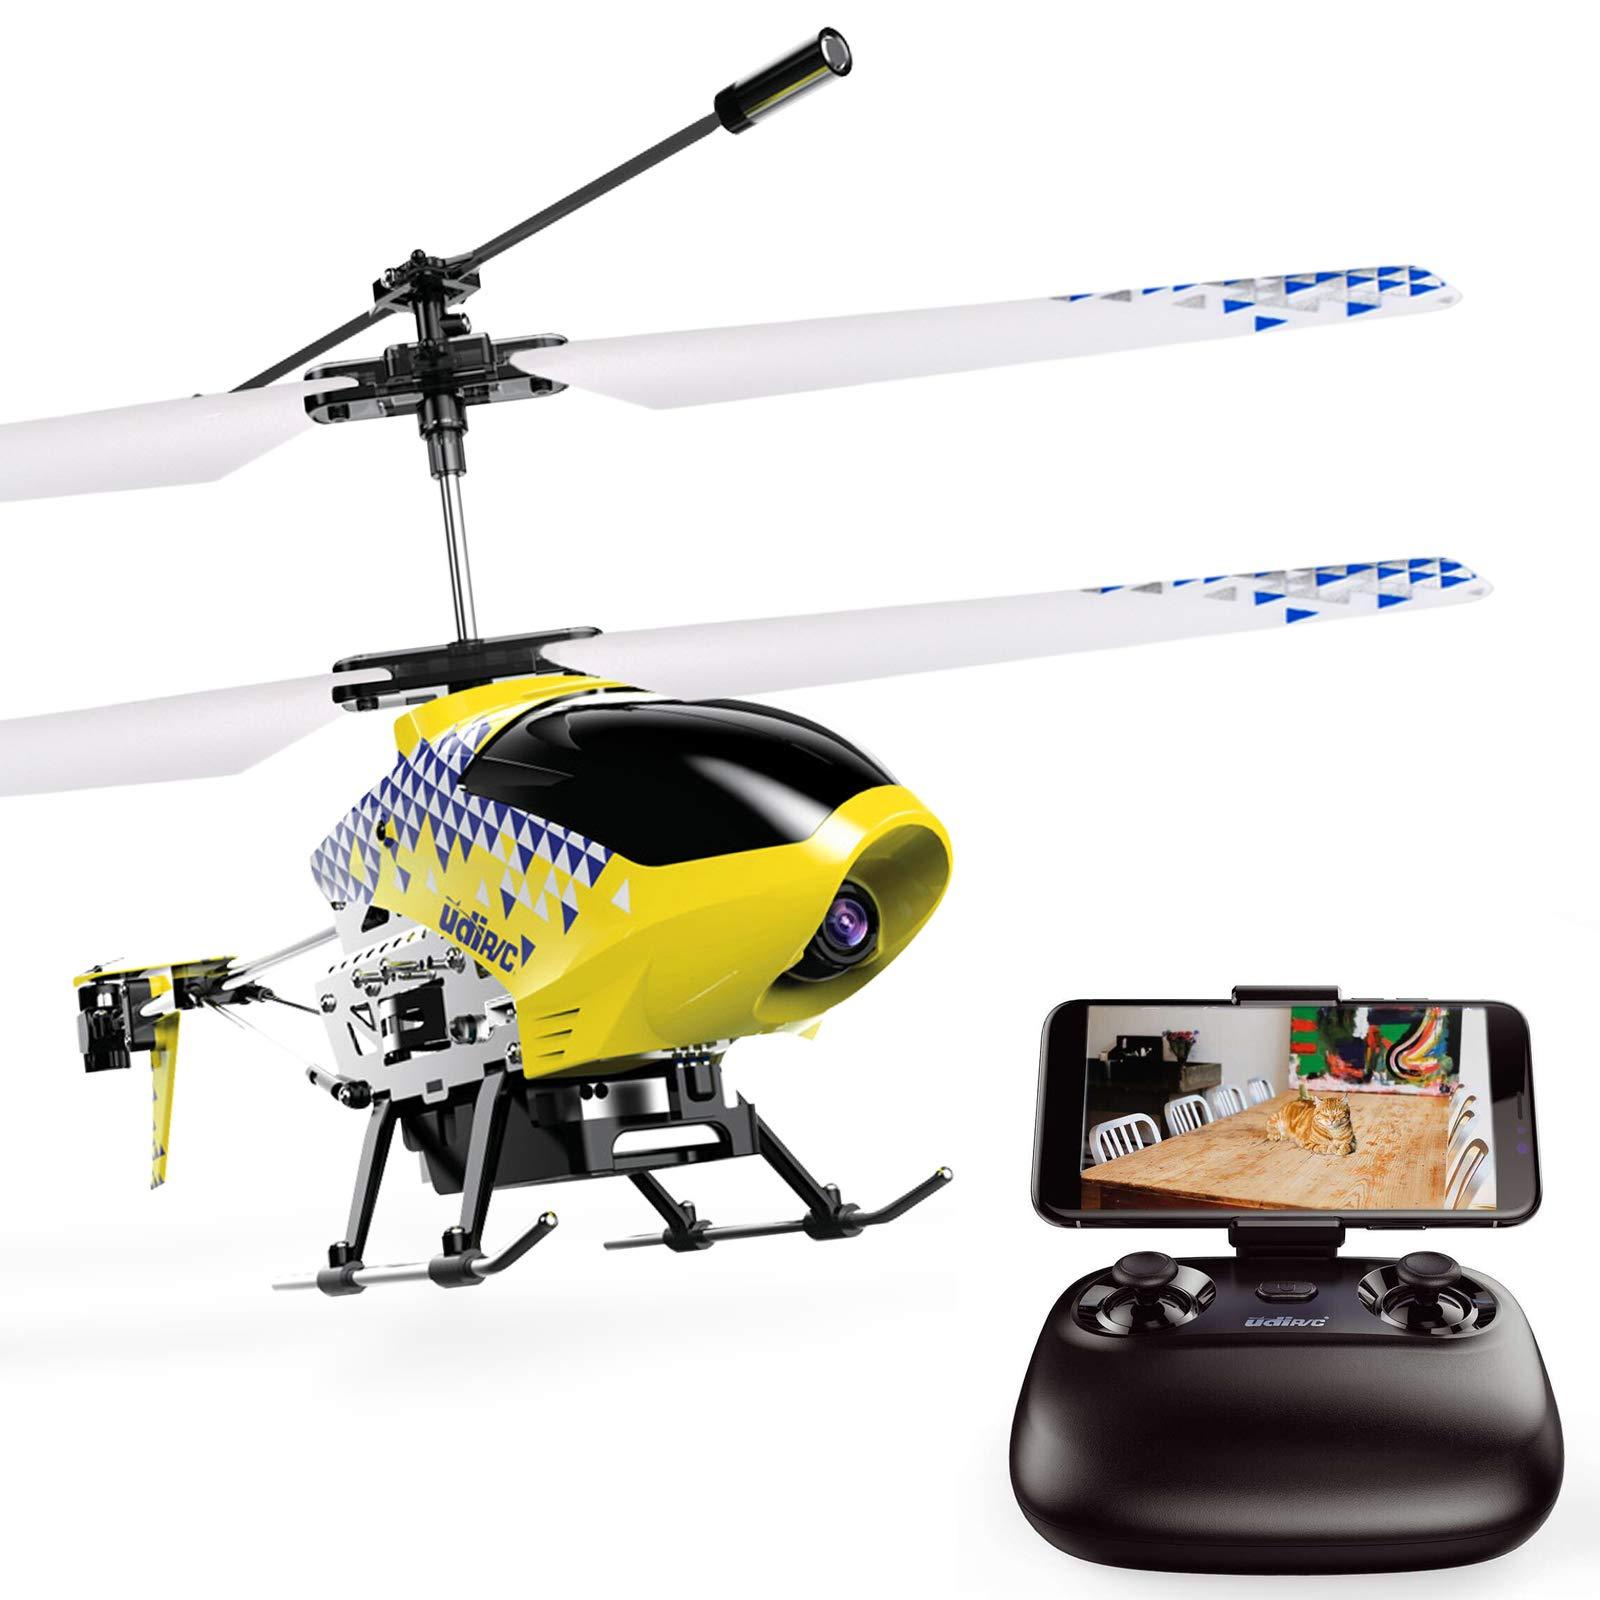 Remote Ke Helicopter: Learning the basics of flying a remote ke helicopter.